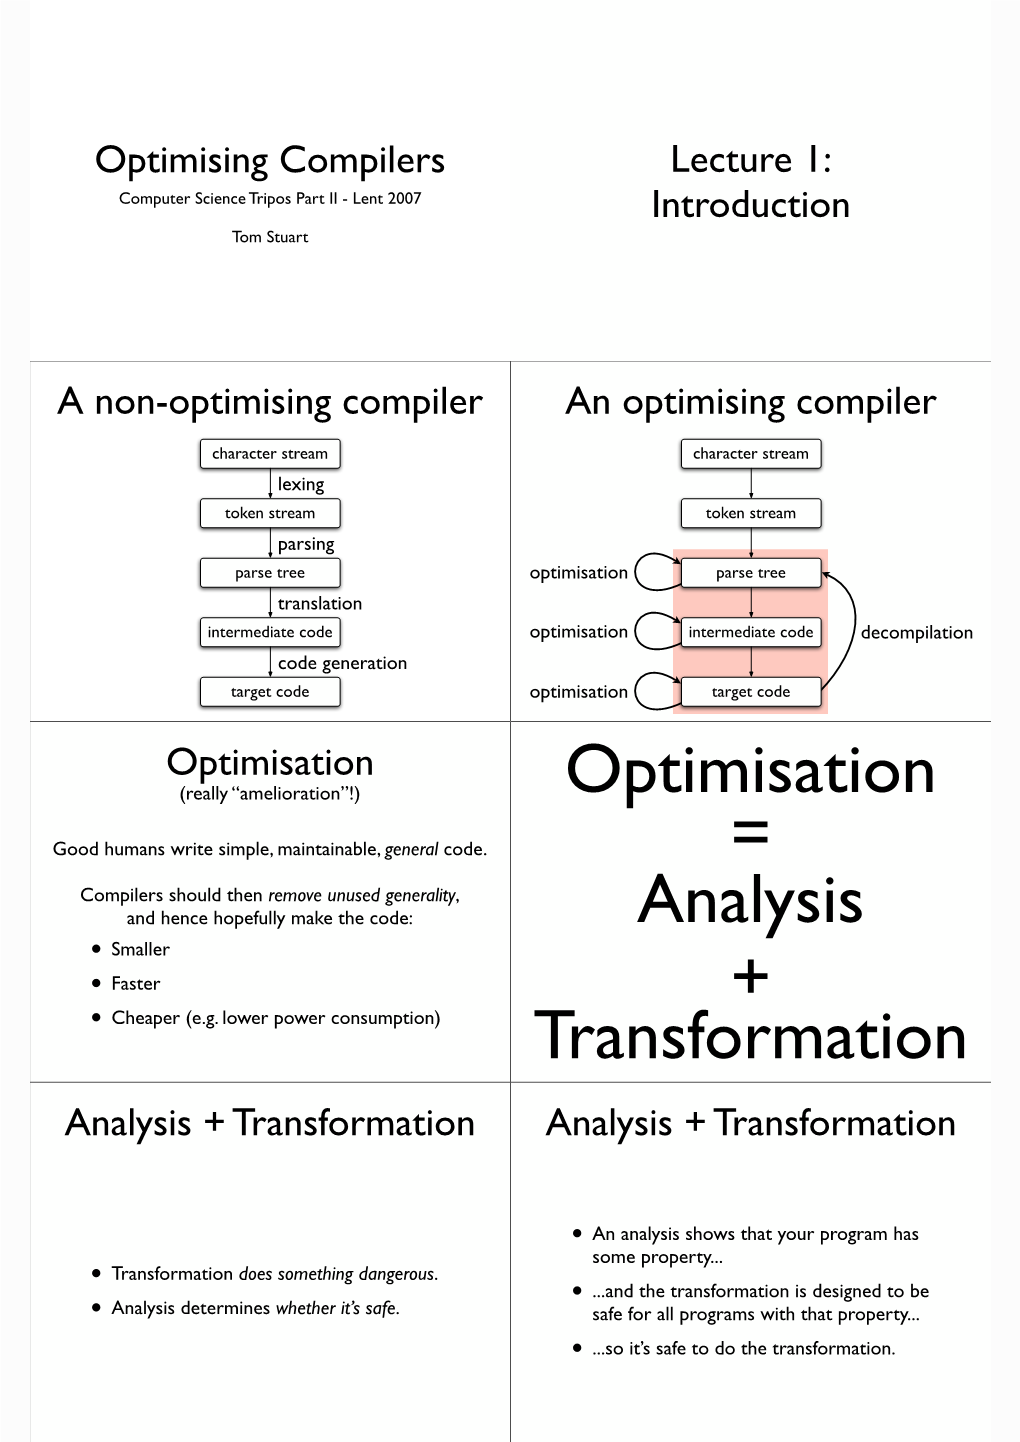 Optimisation = Analysis + Transformation